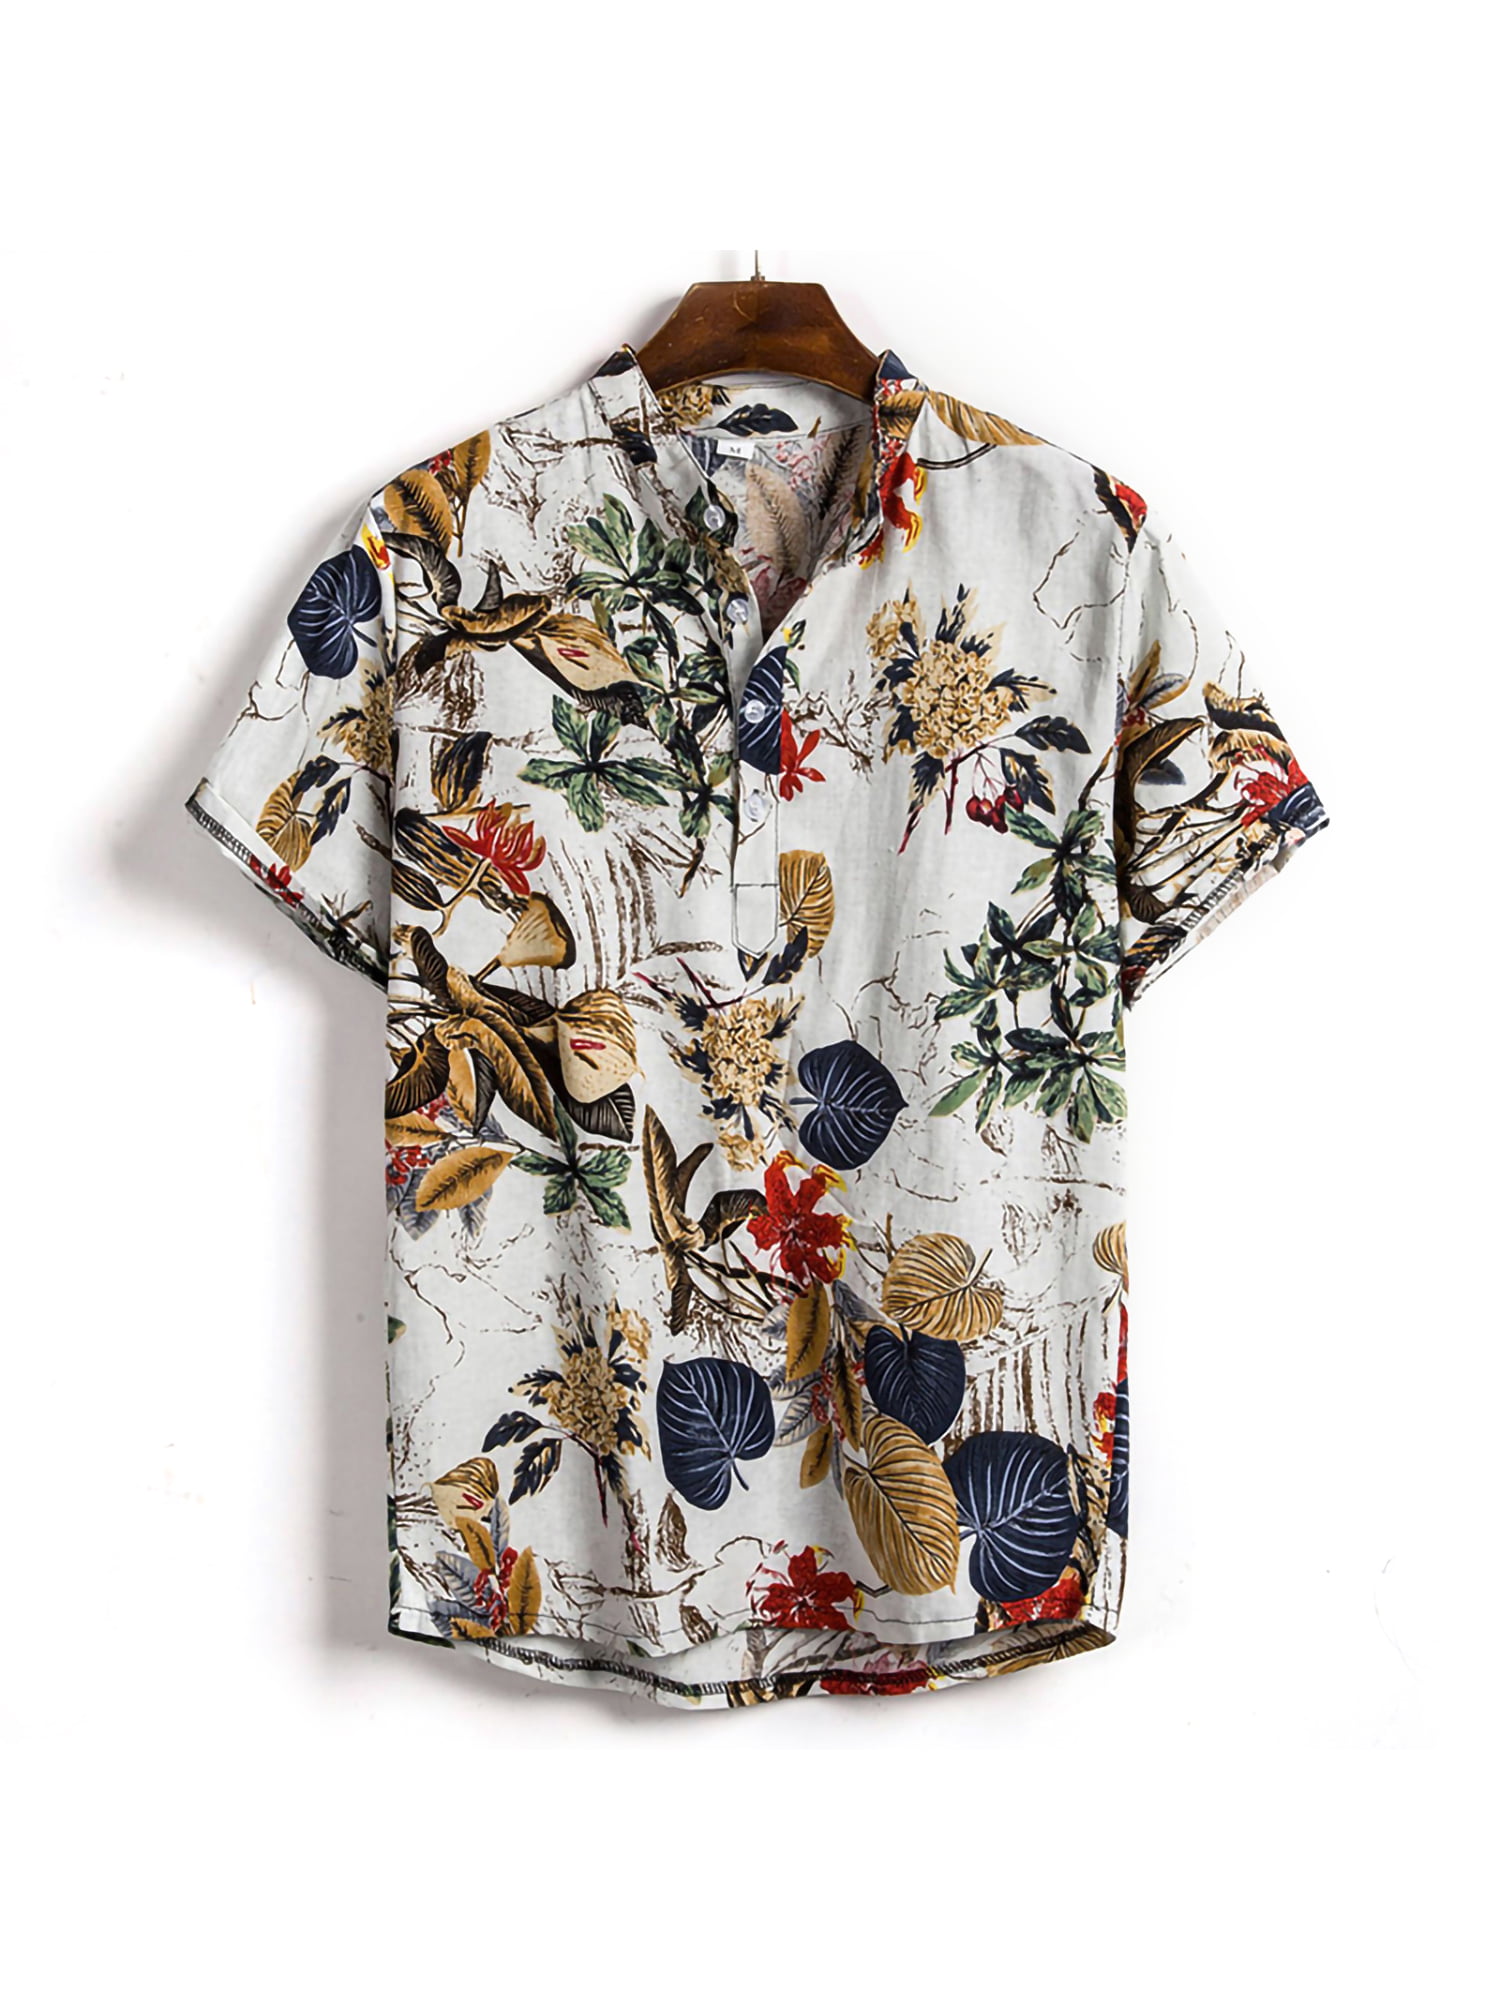 Mens Stylish Long Sleeve T-Shirt Casual Bohemian Printed Pattern V Neck Beach Shirts Summer Hawaiian Slim-fit Tops